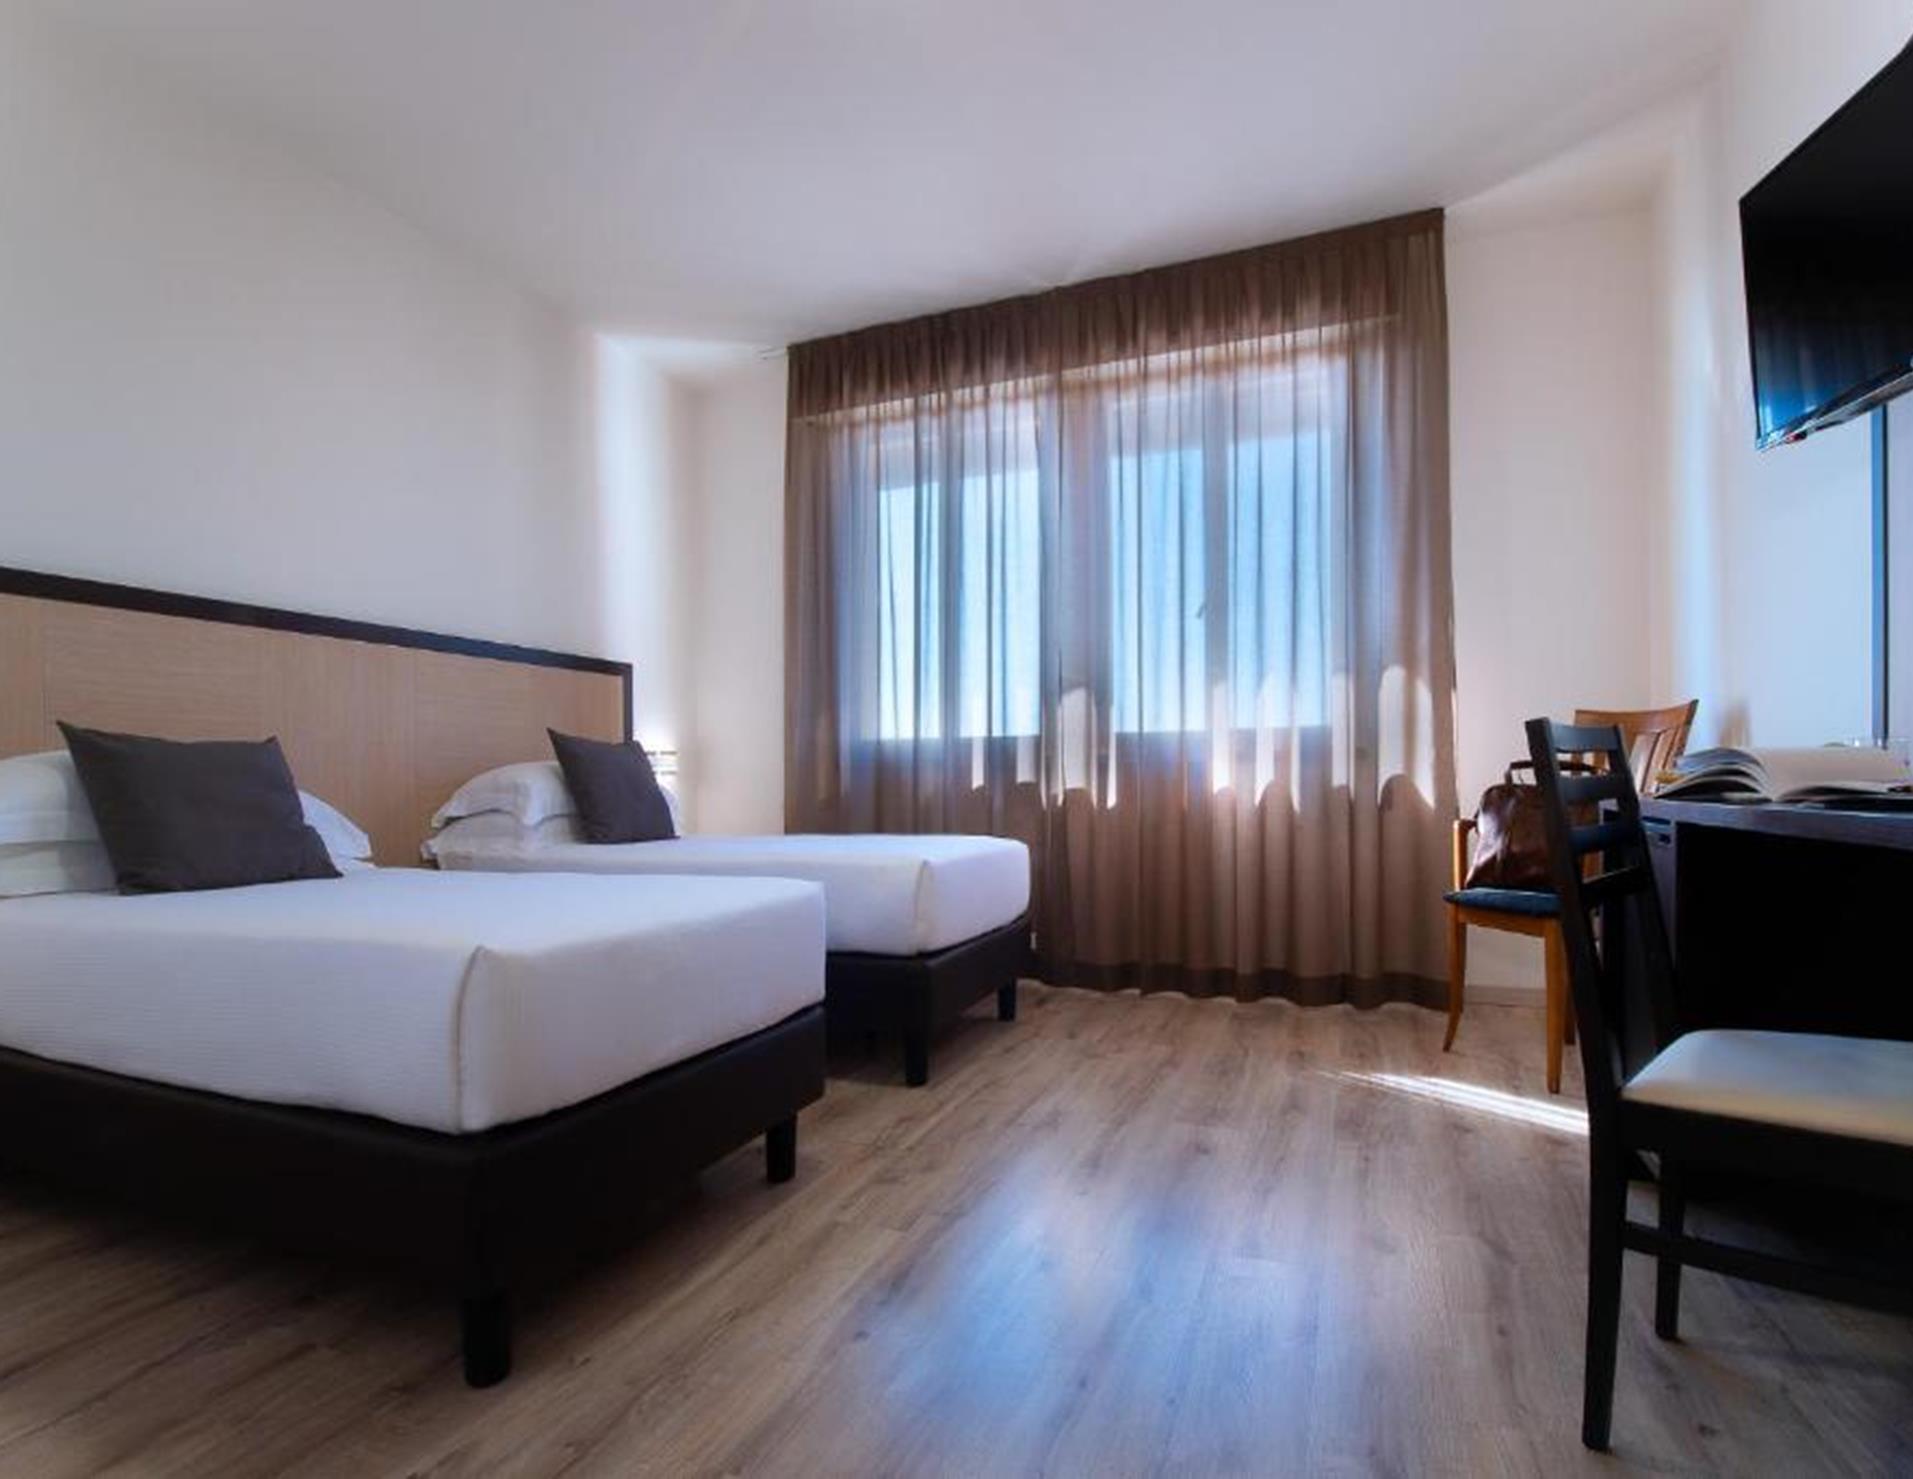 CDH Hotel Modena - Room 5